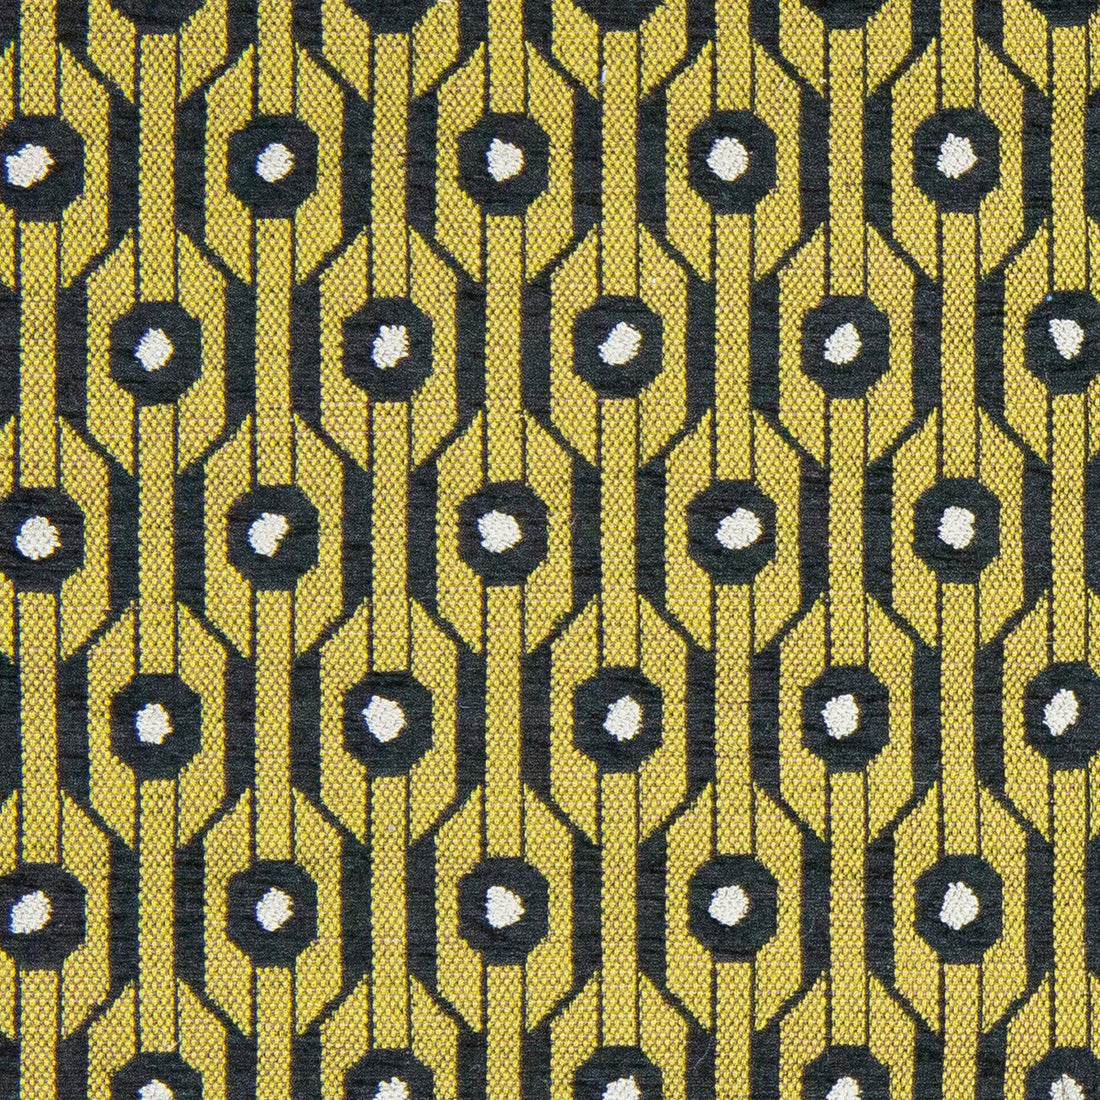 Almirante fabric in mostaza color - pattern GDT5576.003.0 - by Gaston y Daniela in the Gaston Nuevo Mundo collection